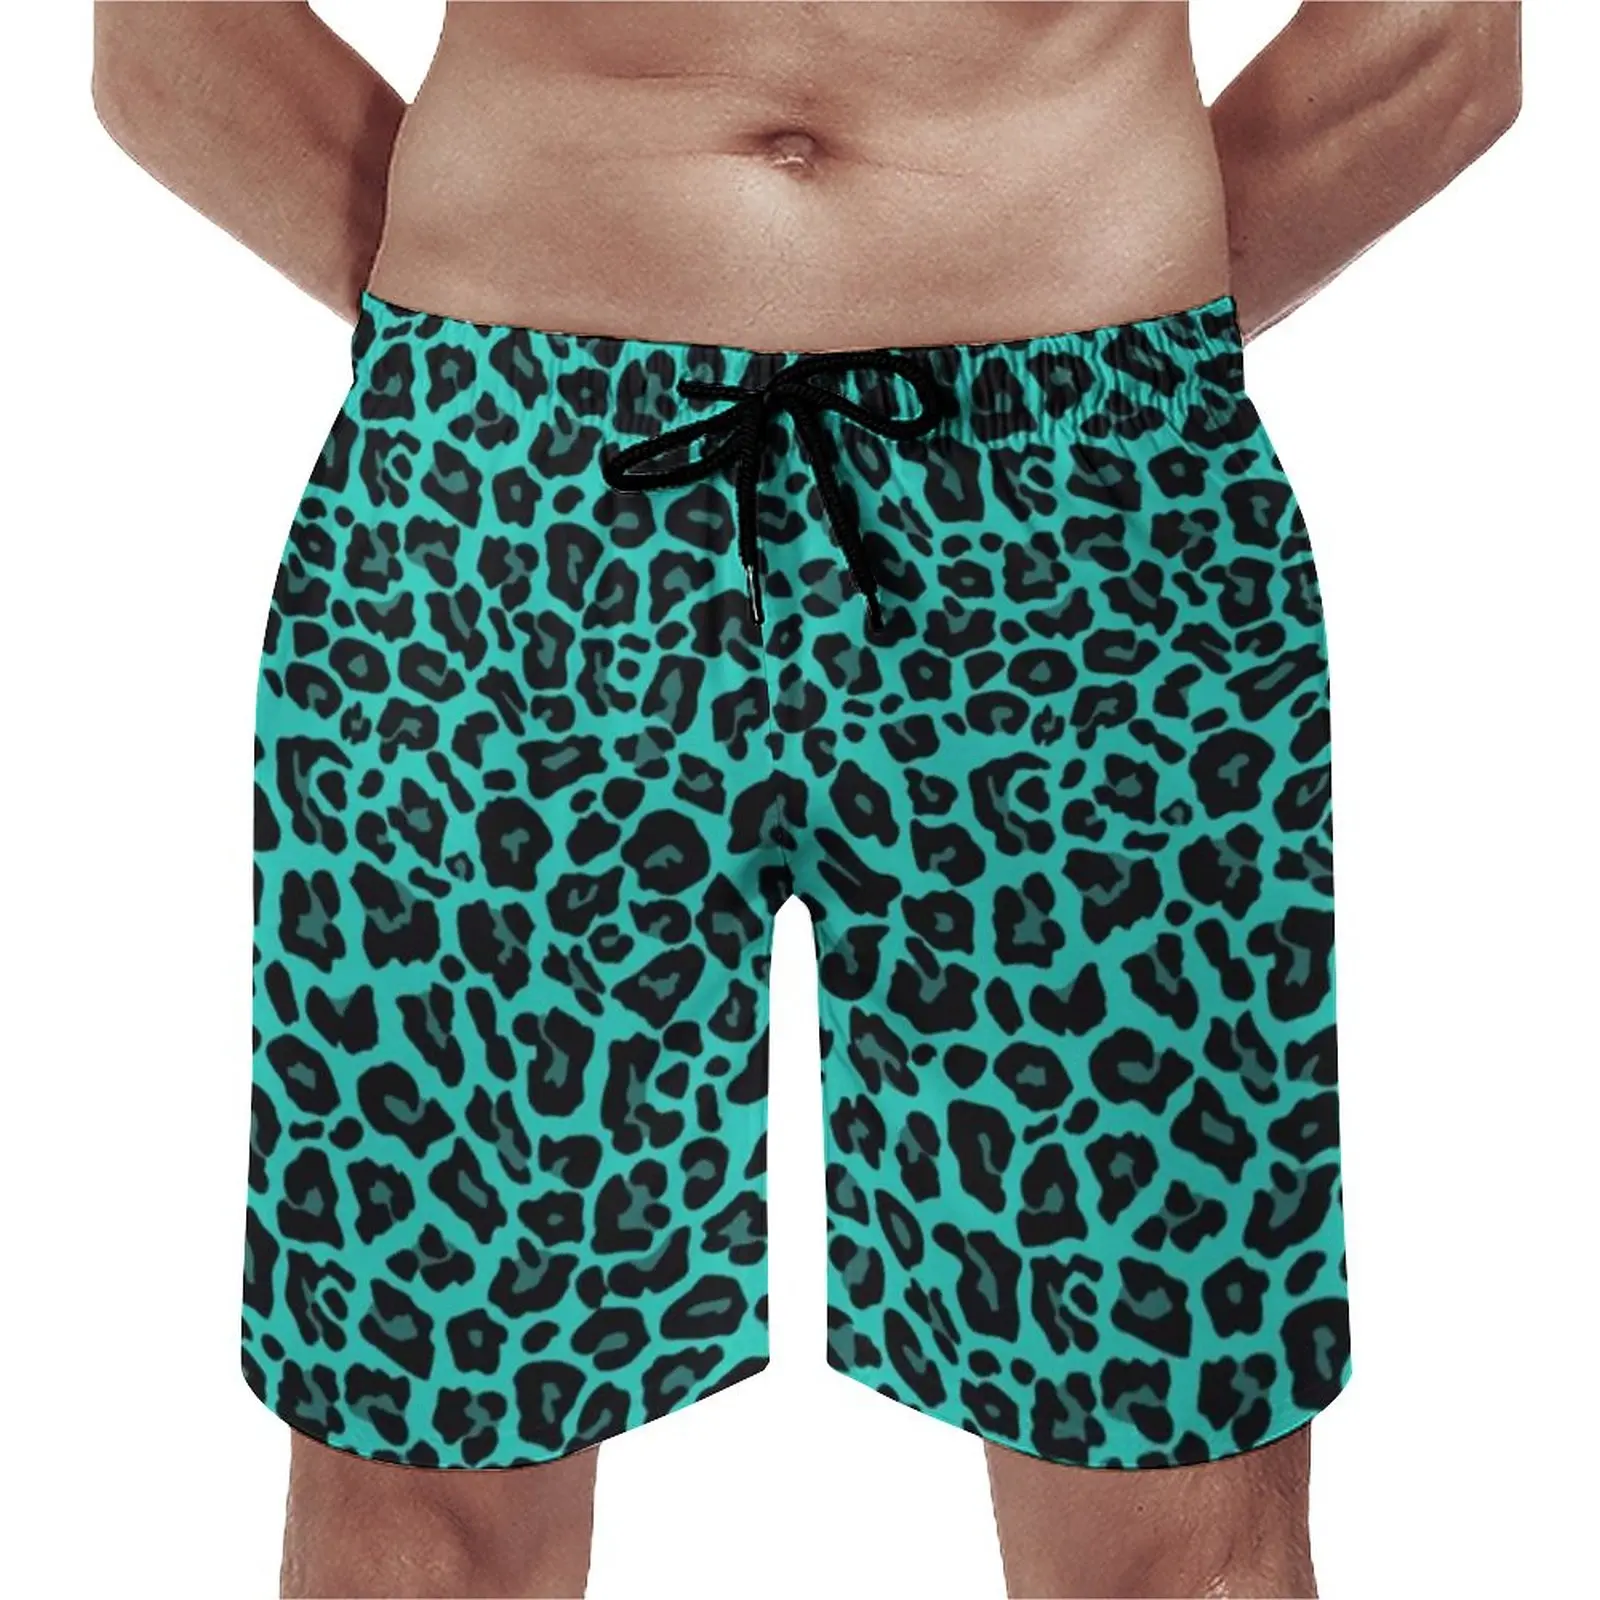 

Green Cheetah Spots Print Board Shorts Leopard Skin Christmas Gift Sportswear Beach Short Pants Quick Dry Retro Swimming Trunks